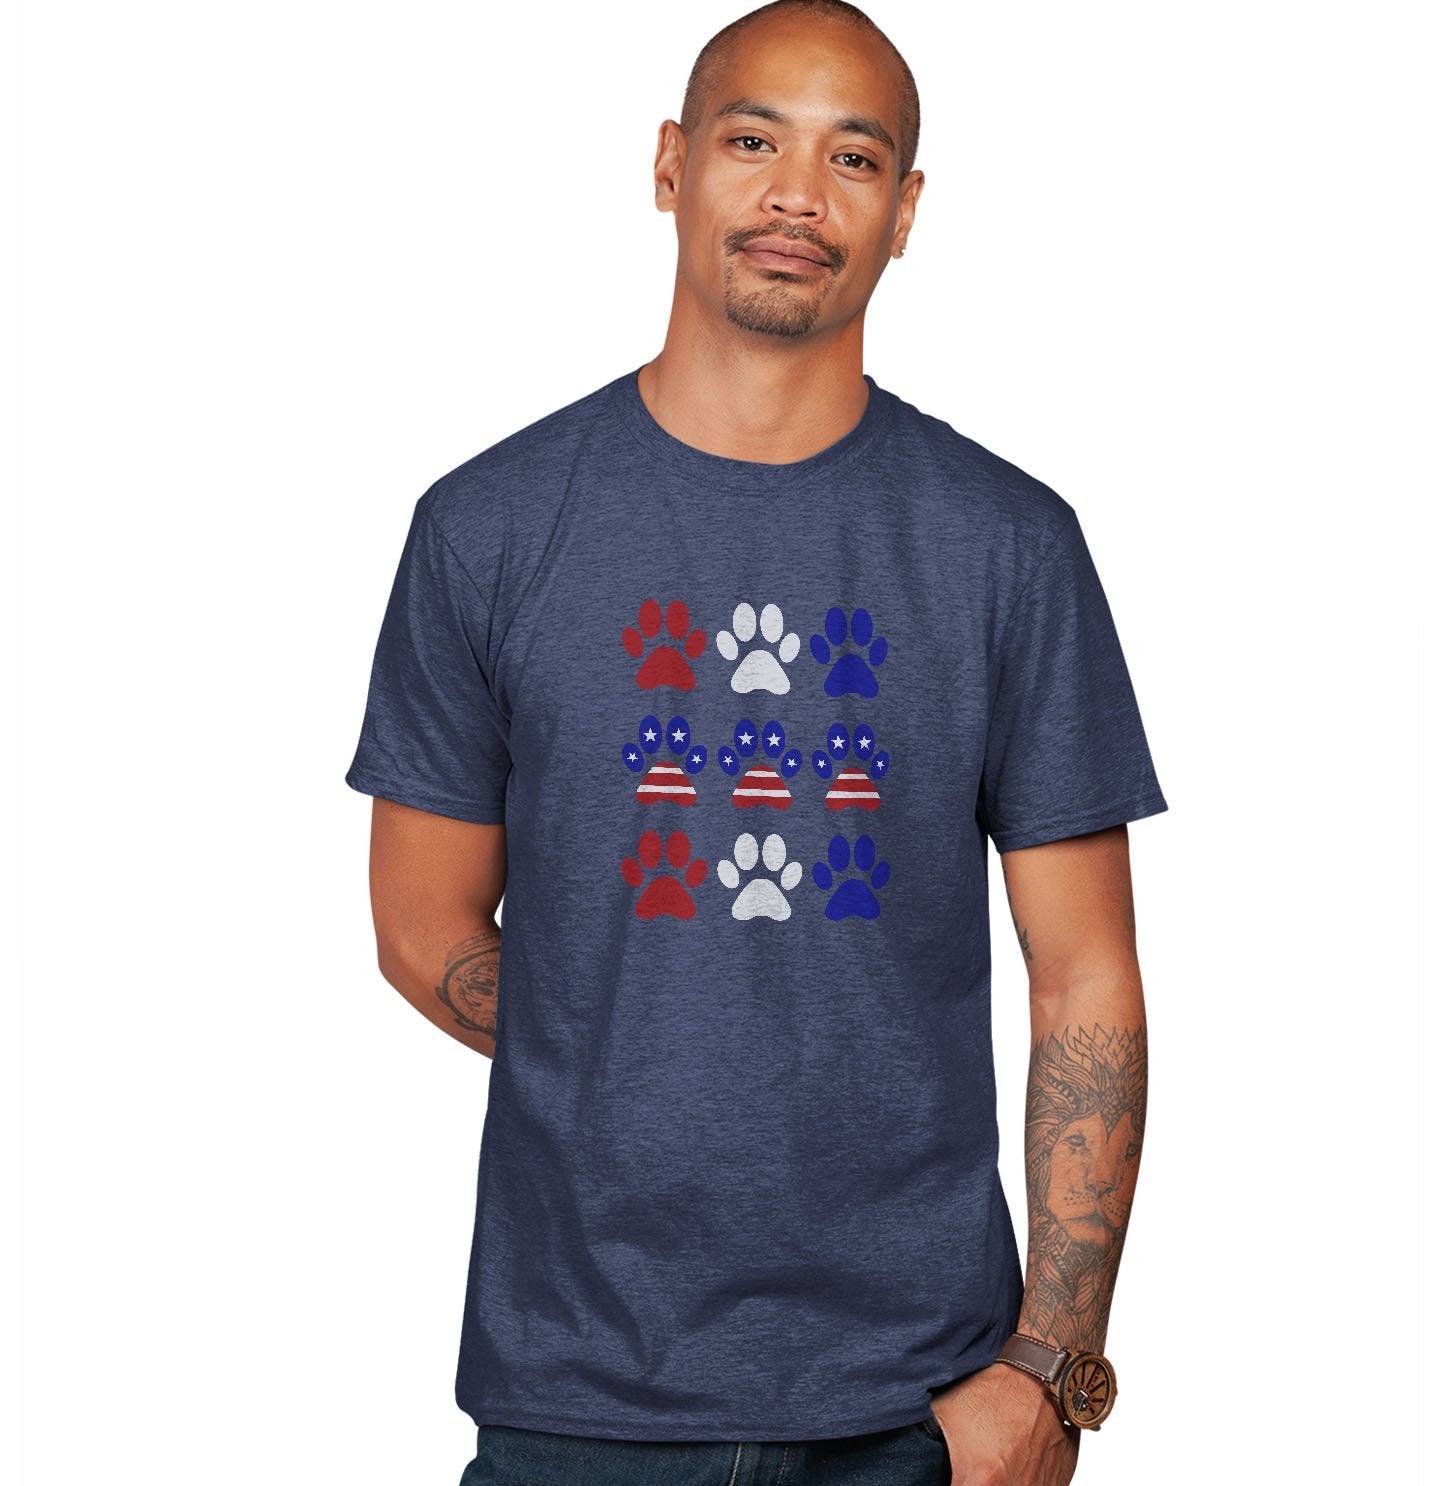 Patriotic Paws - Adult Tri-Blend T-Shirt